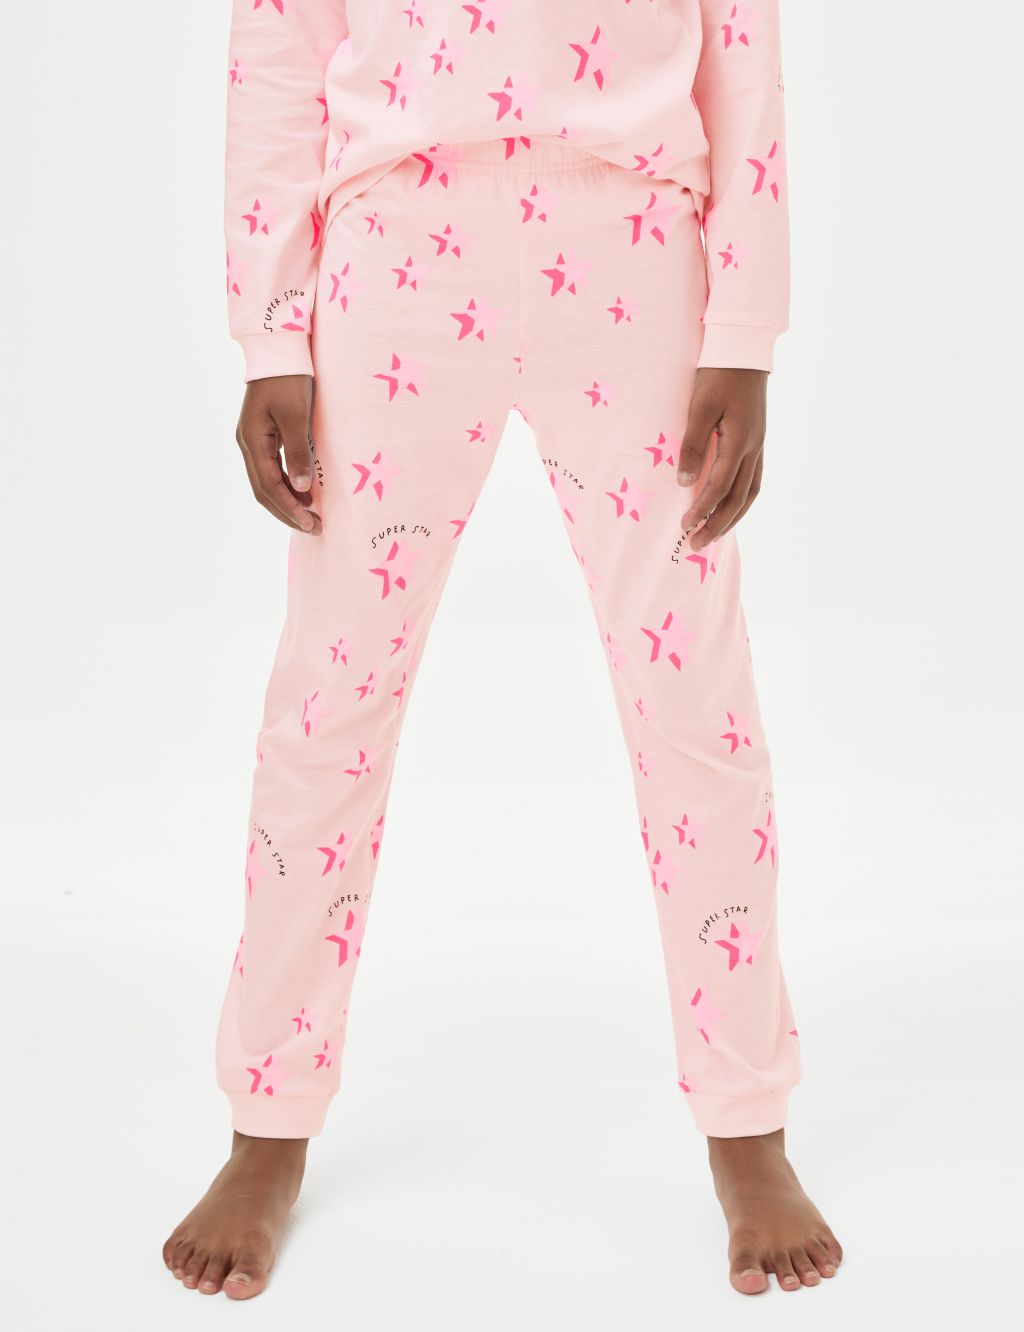 Ulla Popken Cotton Star Print Pajama Set